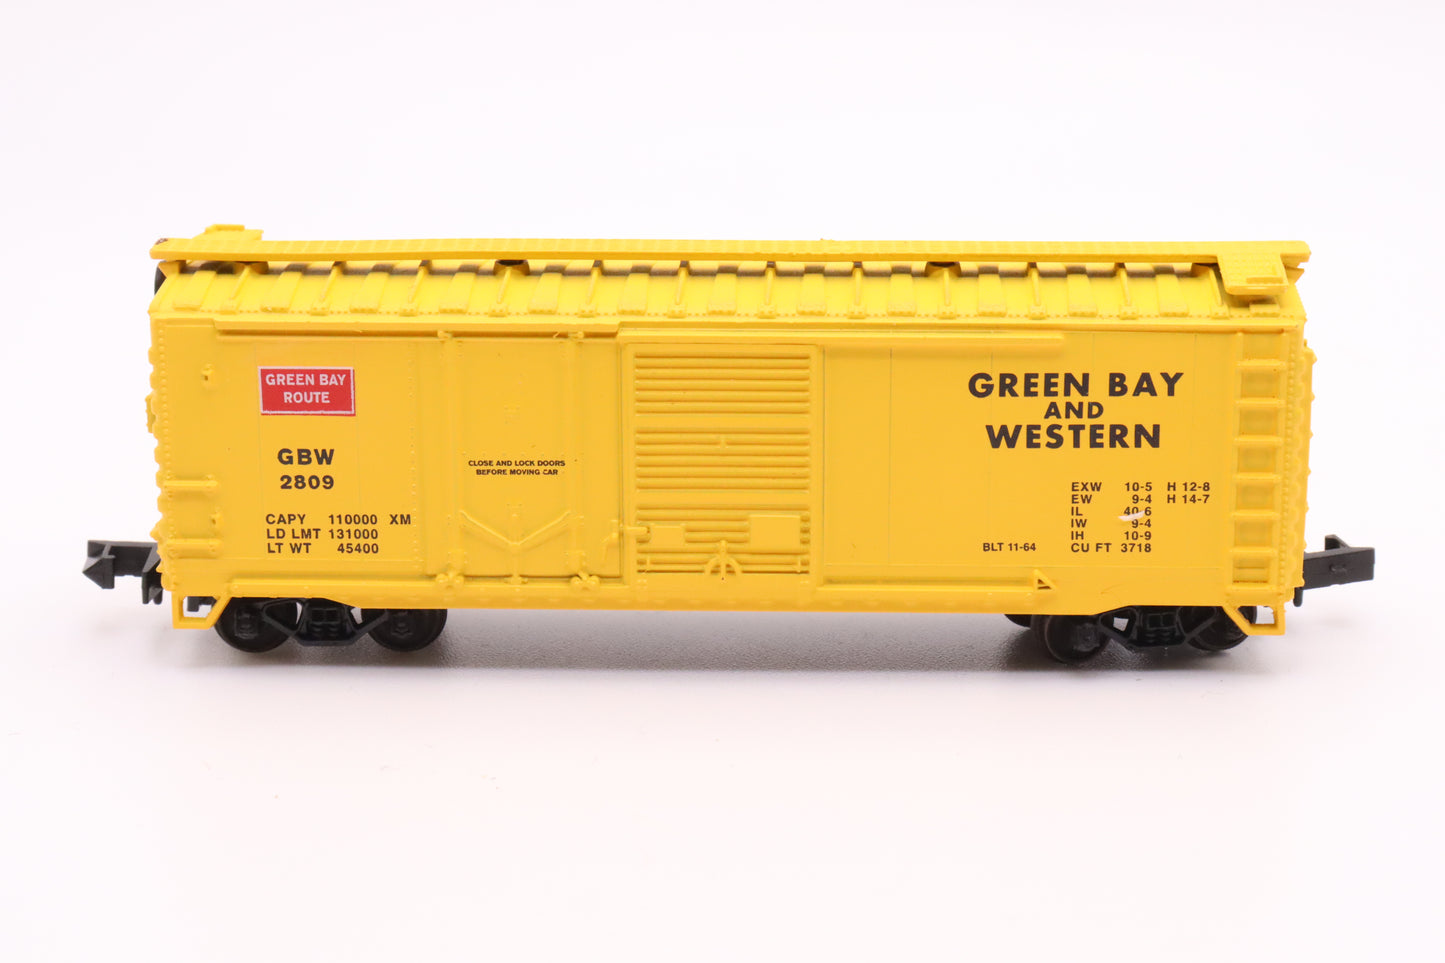 CC-1-001757(2) - 40' Boxcar Plug/Slide Door - Green Bay & Western - GBW #2809